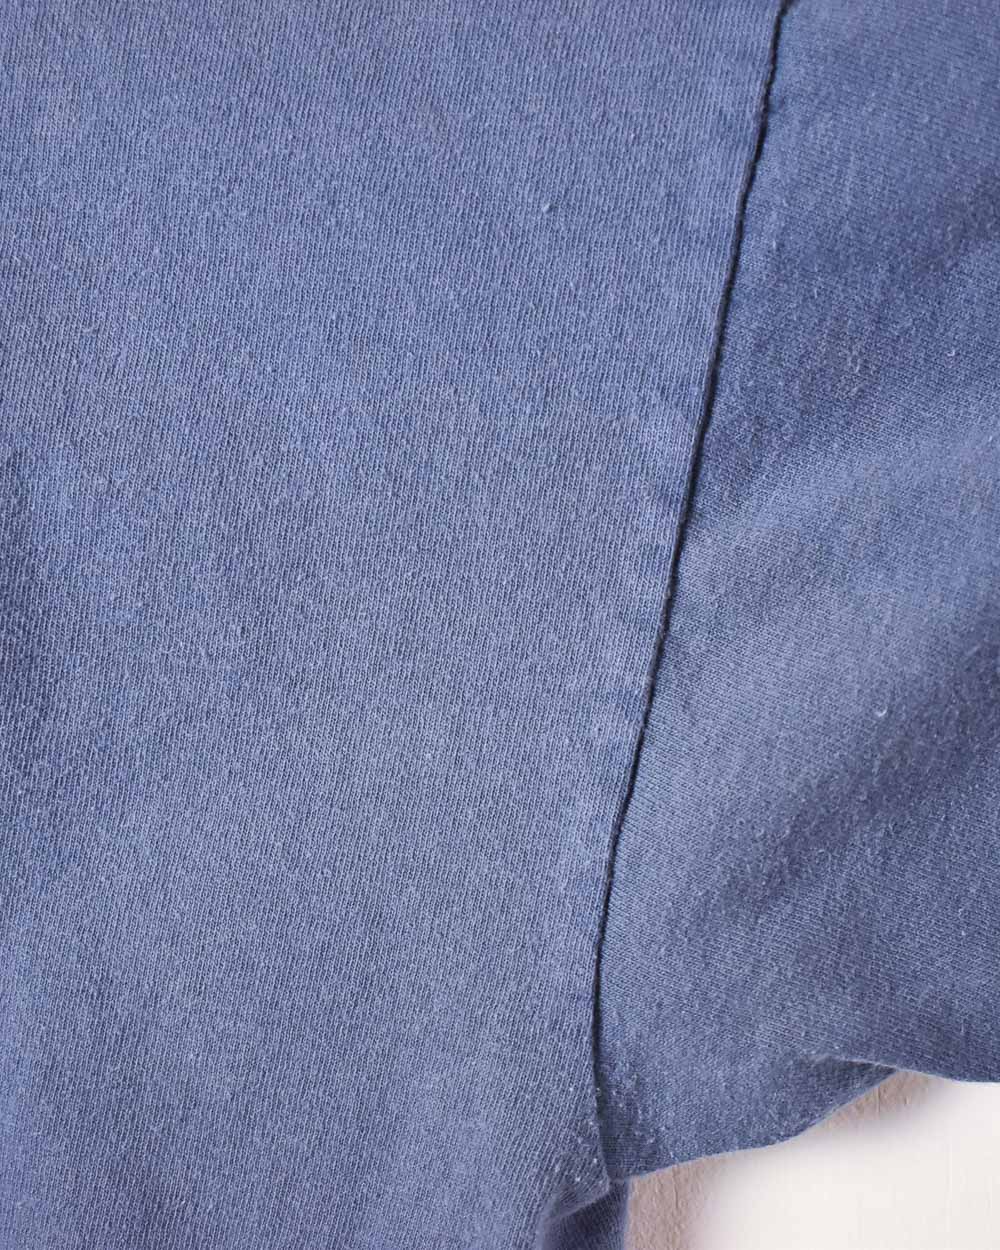 Blue Kiwah Island T-Shirt - XX-Large